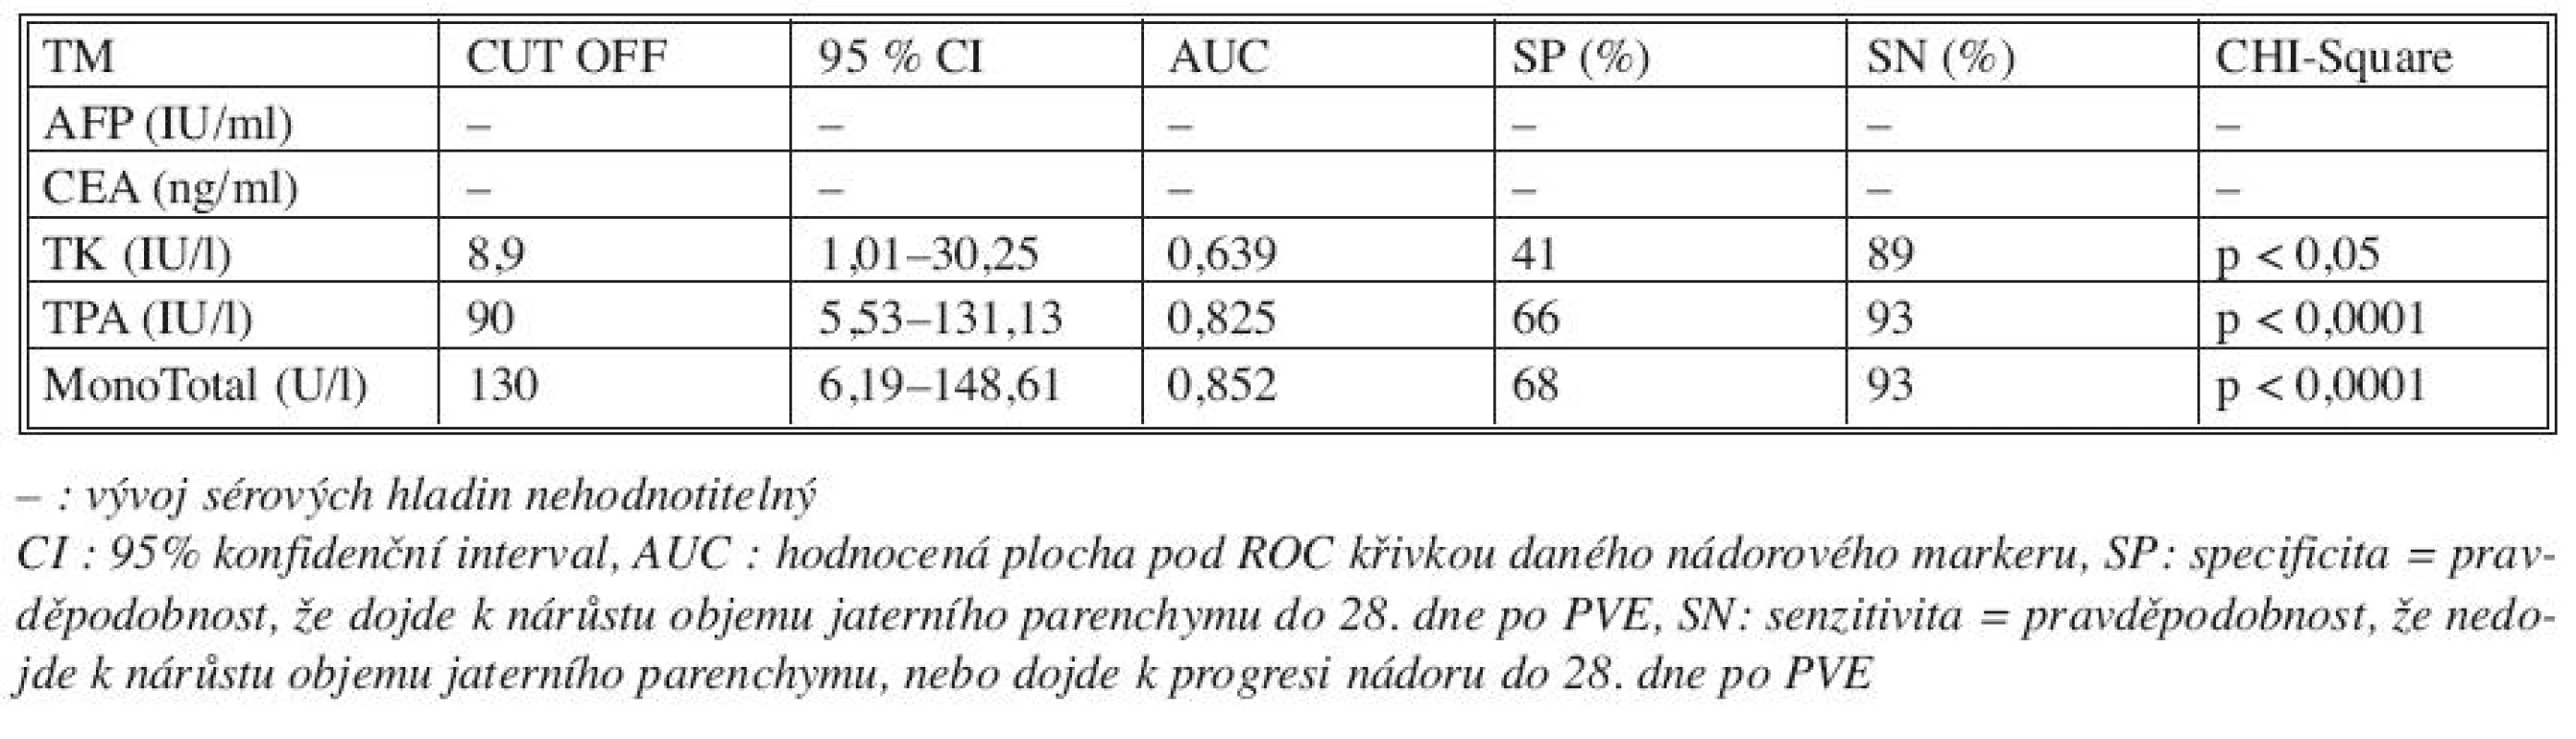 Význam vývoje sérových hladin markerů (0.–28. den) na výsledek PVE
Tab. 4. Significance of the course of TM serum levels (Day 0–28 after PVE) in correlation with PVE outcomes